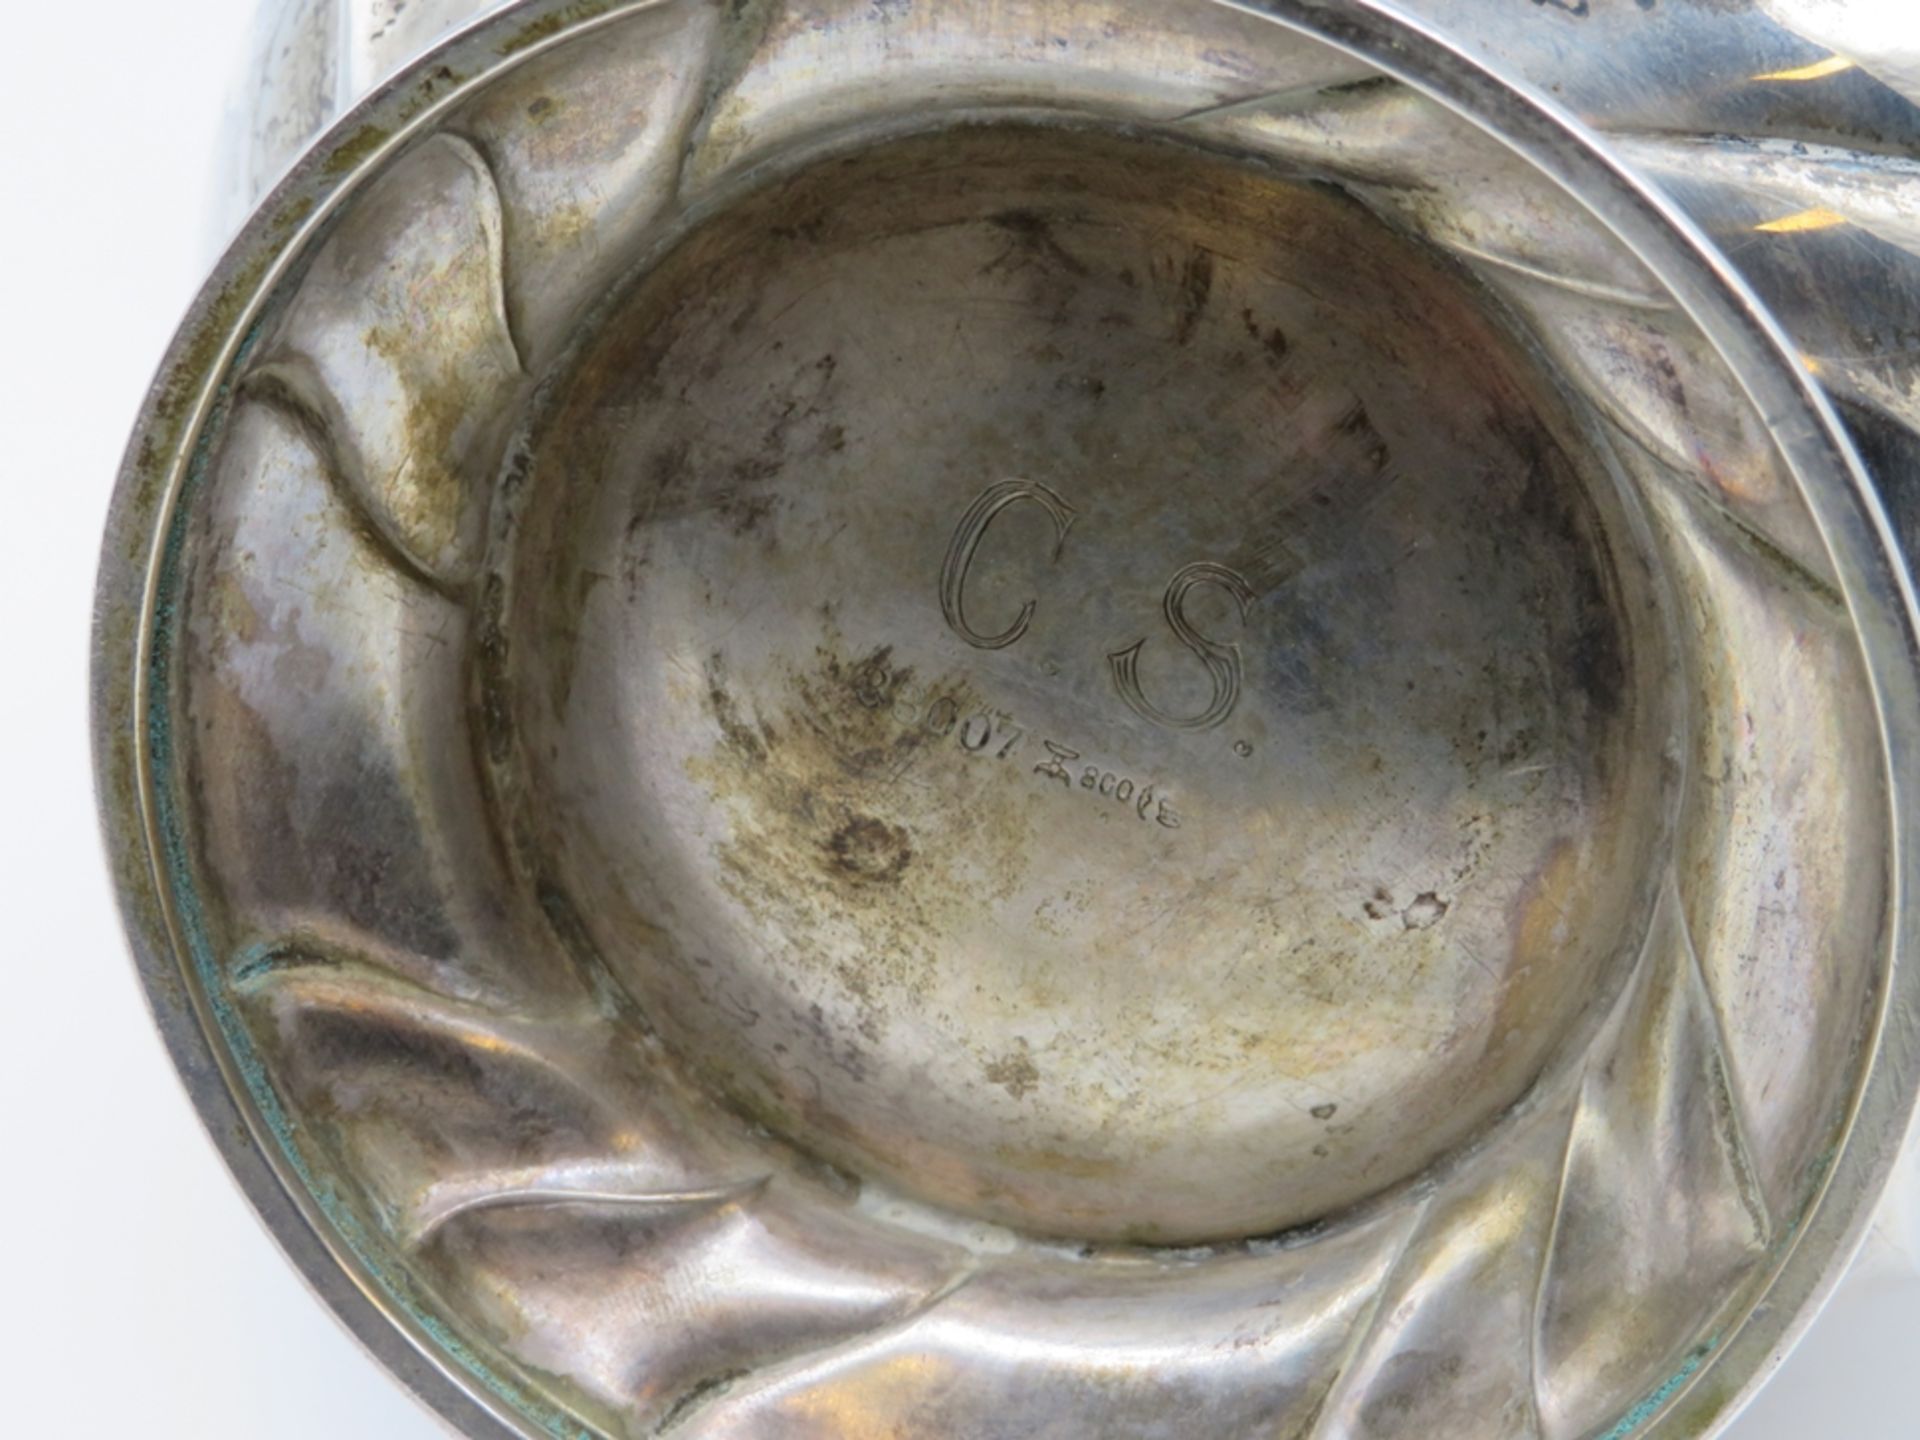 Kaffeekanne, Wilkens, Barockstil, 800er Silber, gepunzt, 586 g, 2 Dellen, h 26 cm, d 20 cm. - Image 2 of 2